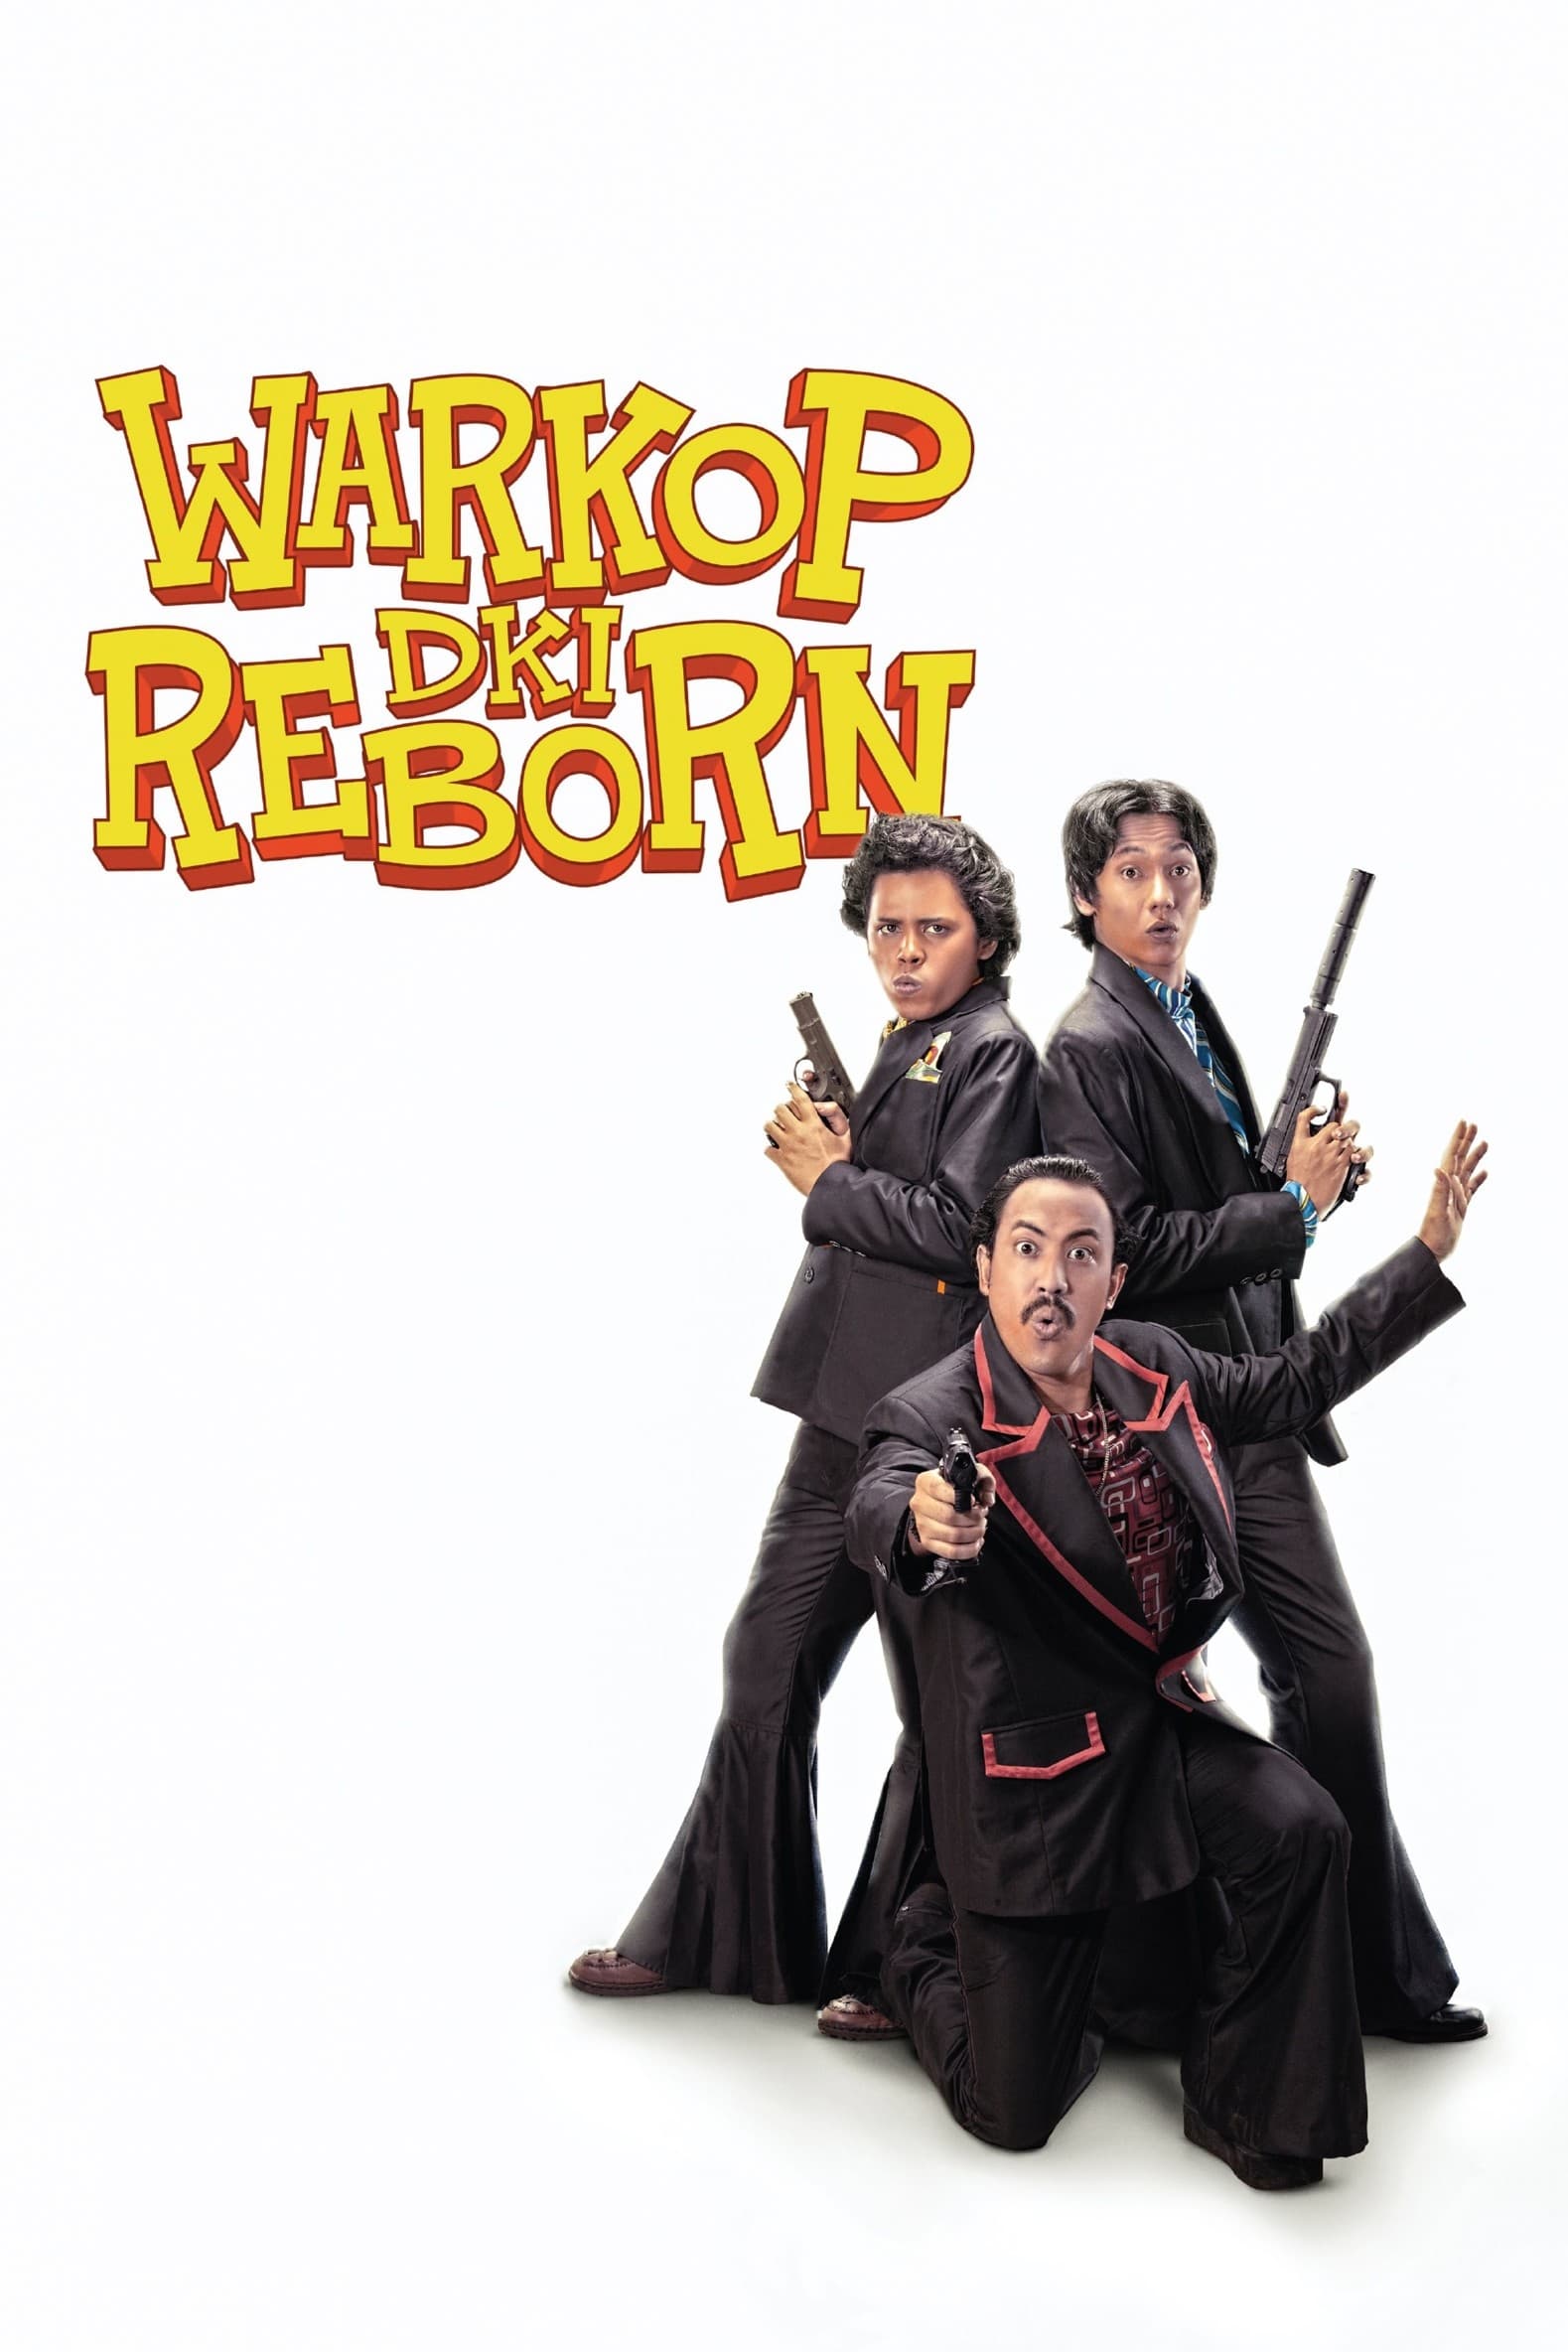 Warkop DKI Reborn (2019)